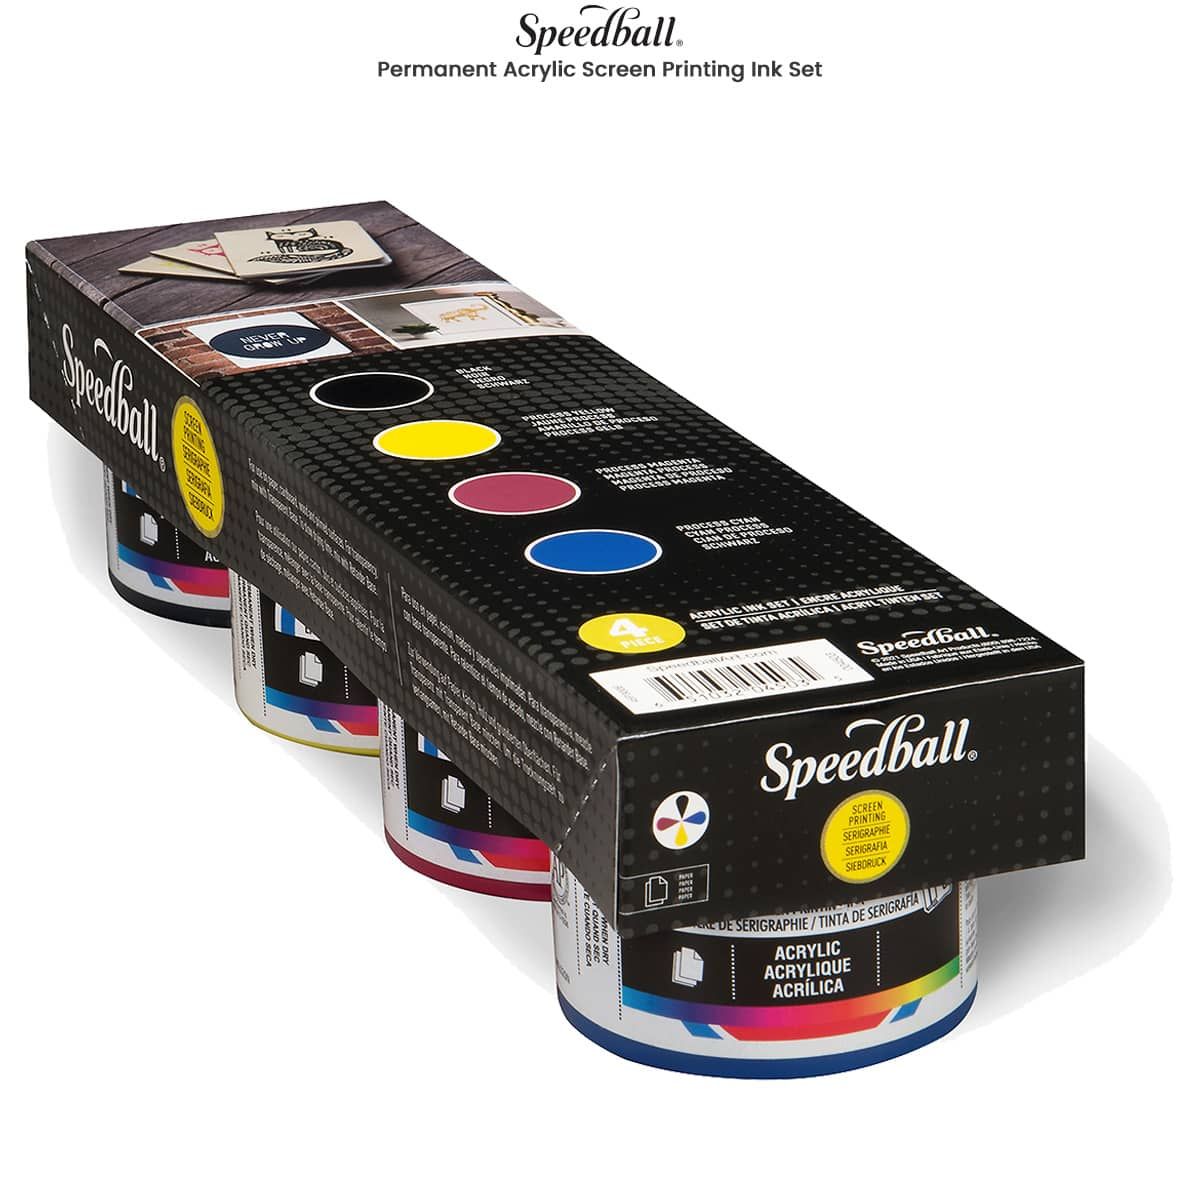 Speedball Permanent Acrylic Screen Printing Ink Set